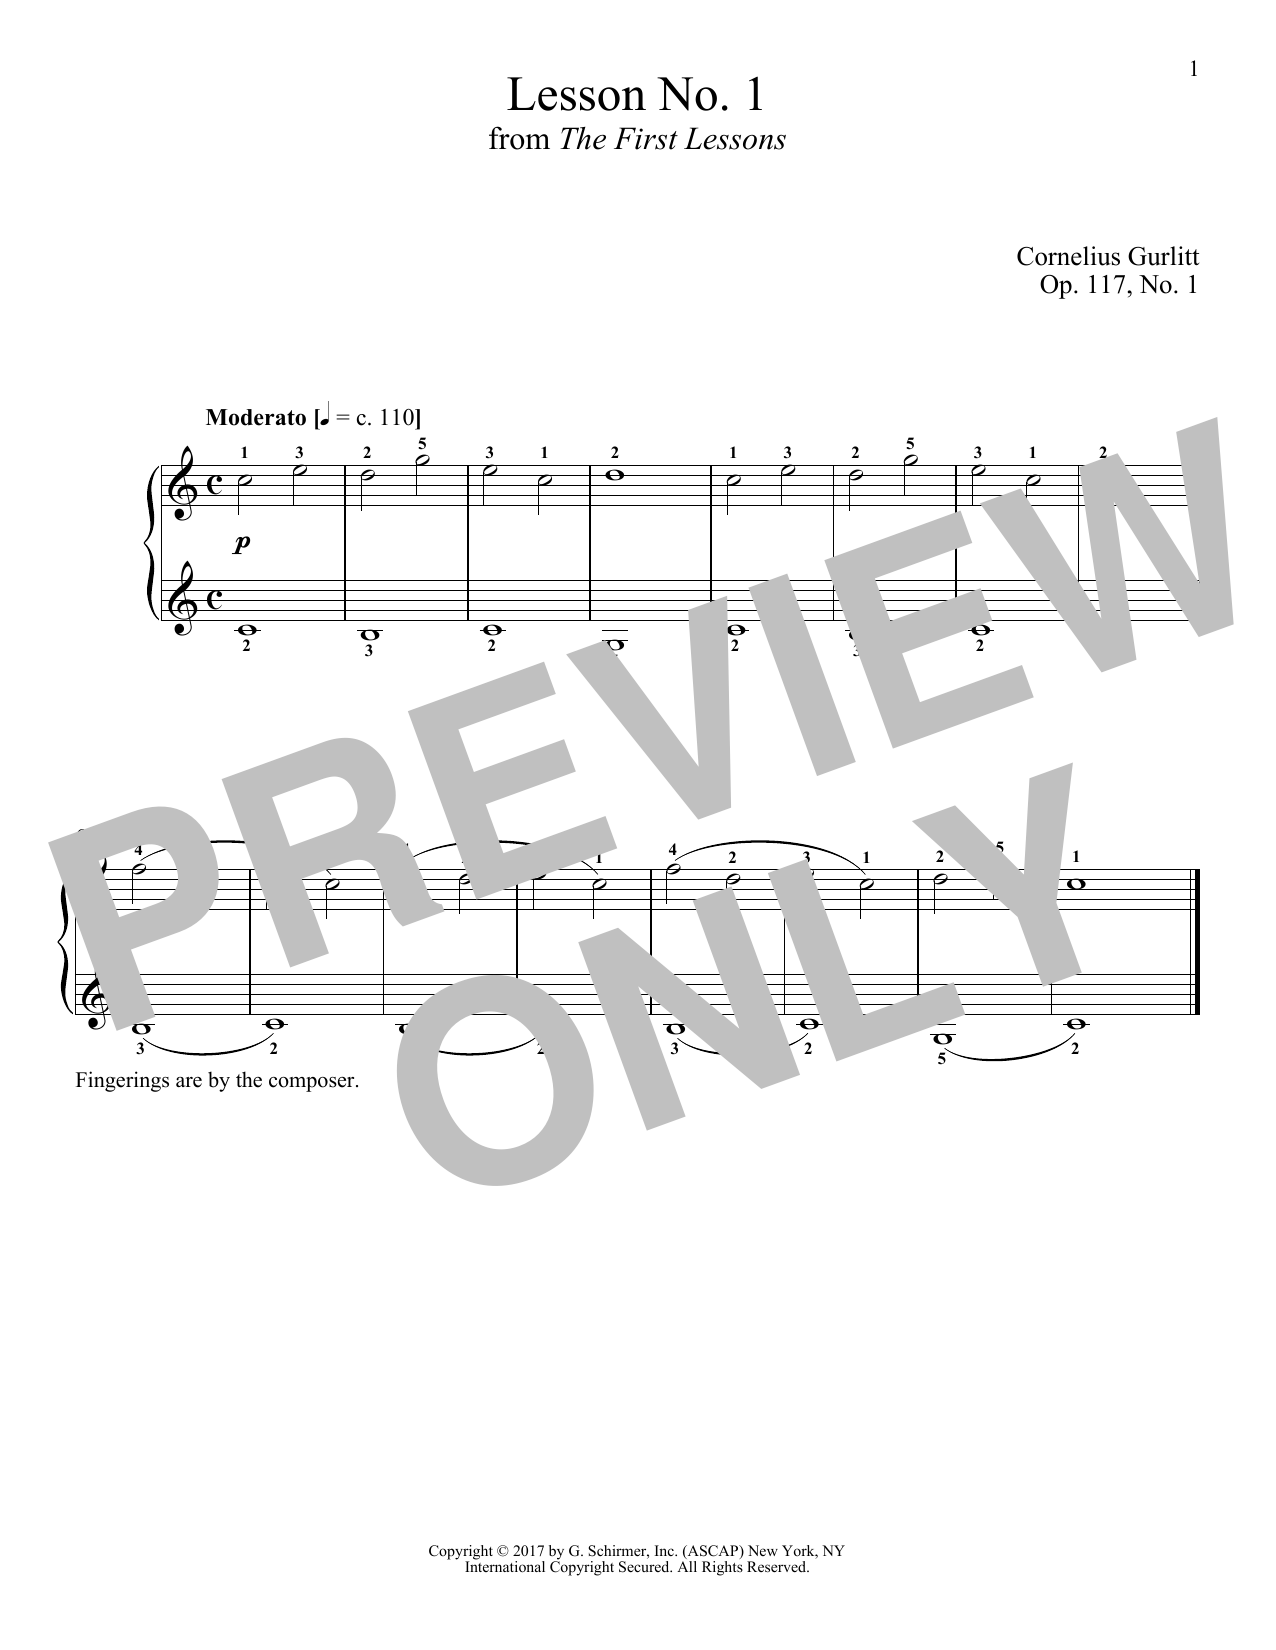 Download Cornelius Gurlitt Moderato, Op. 117, No. 1 Sheet Music